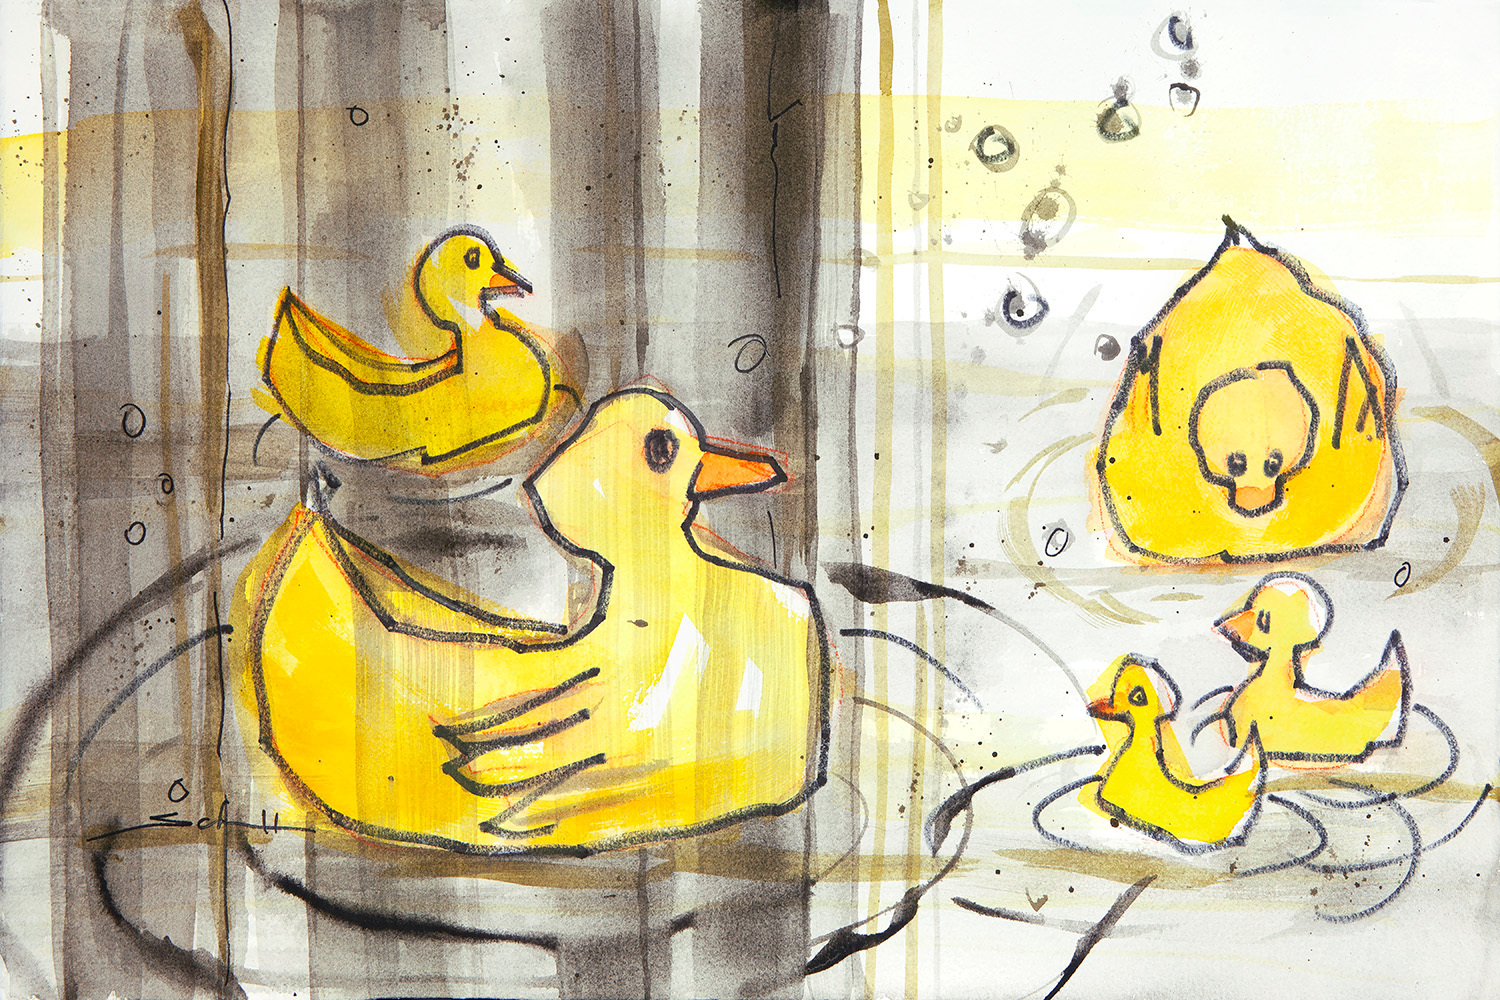 Duckies in bathtub with shower curtain fouigd